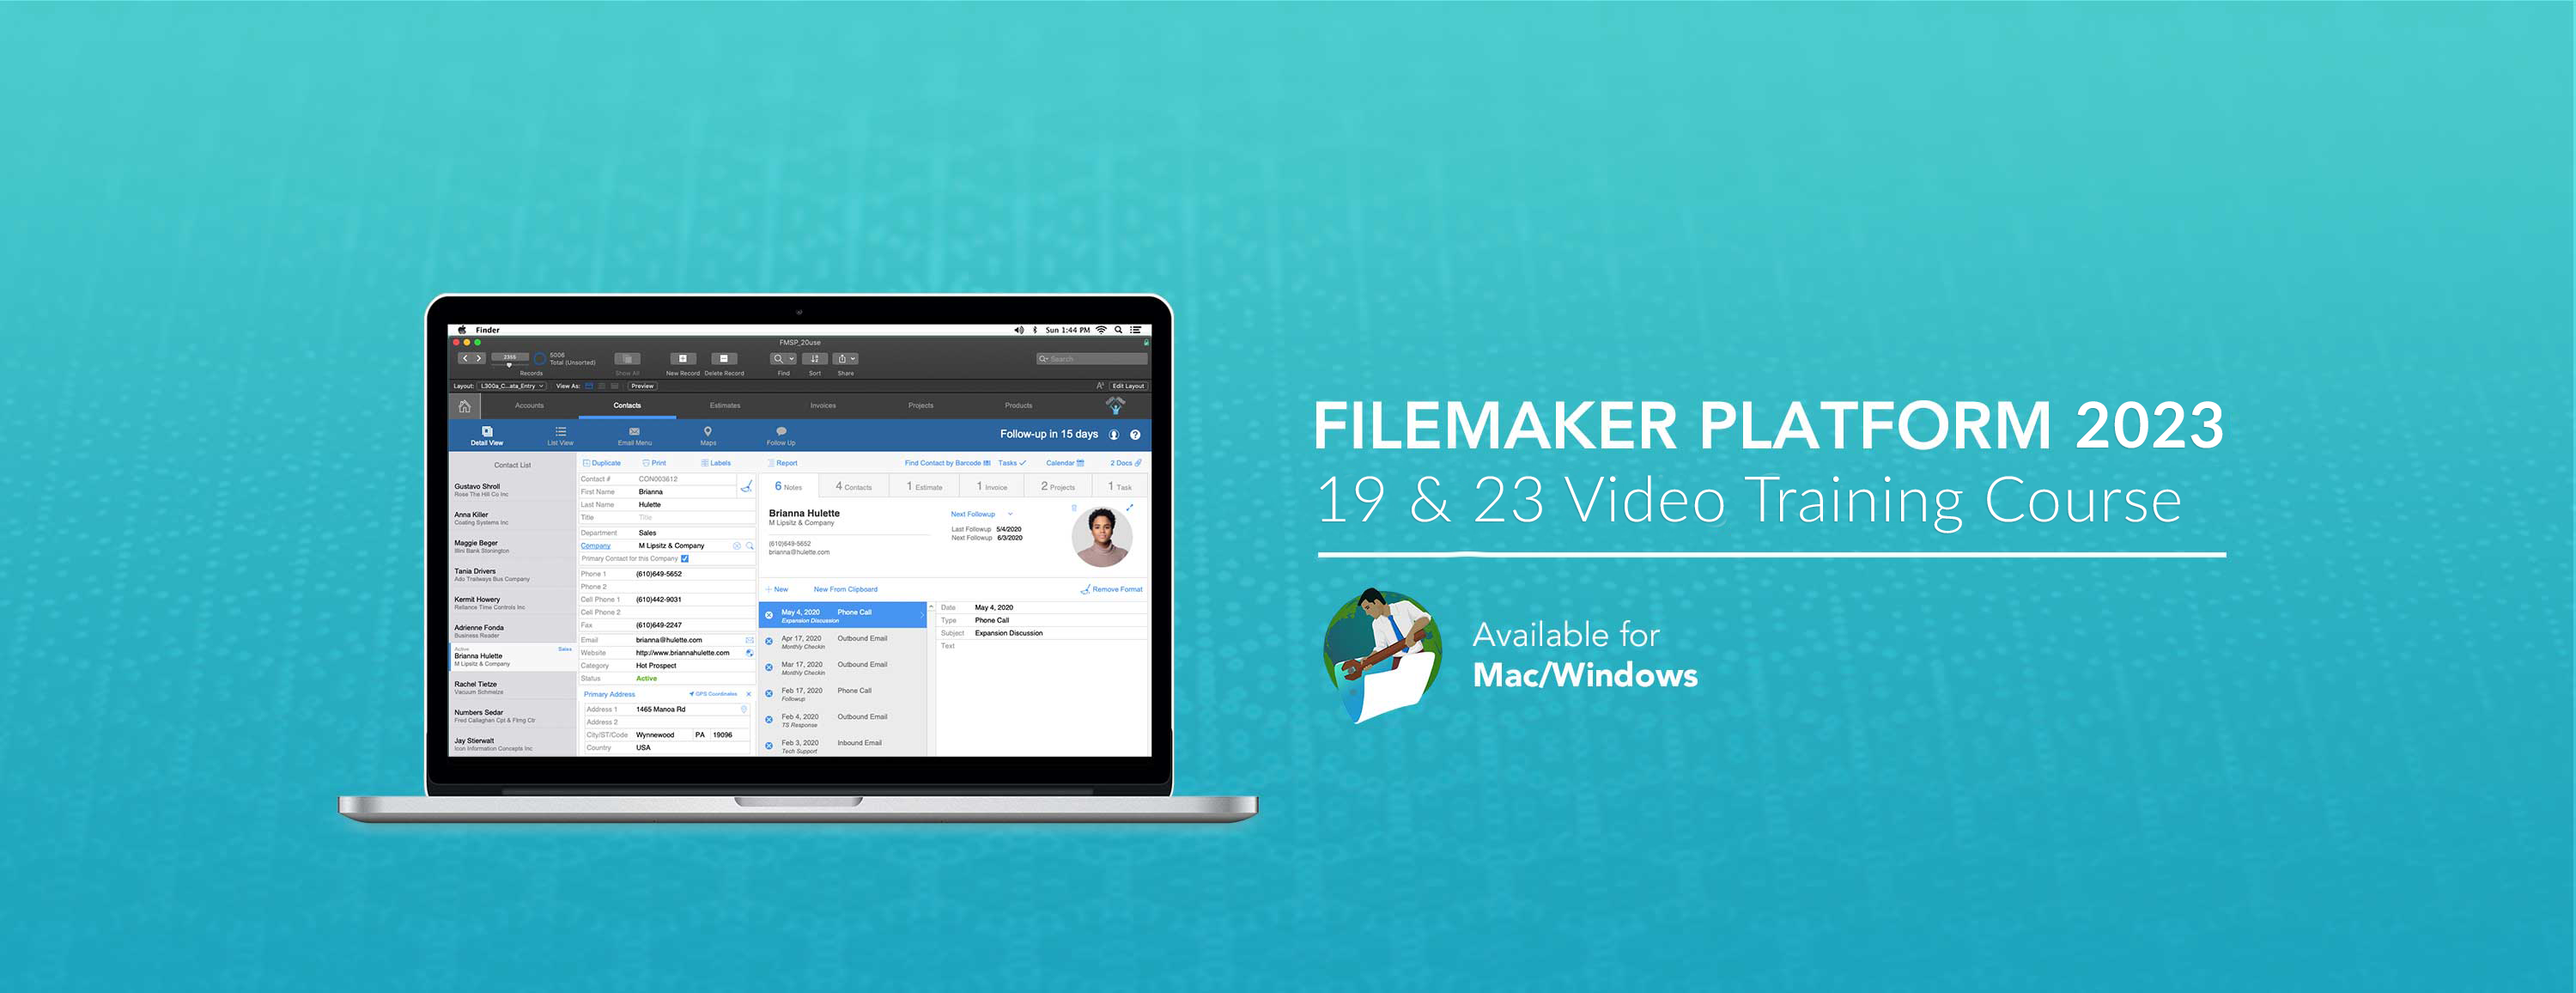 FileMaker Platform 2023